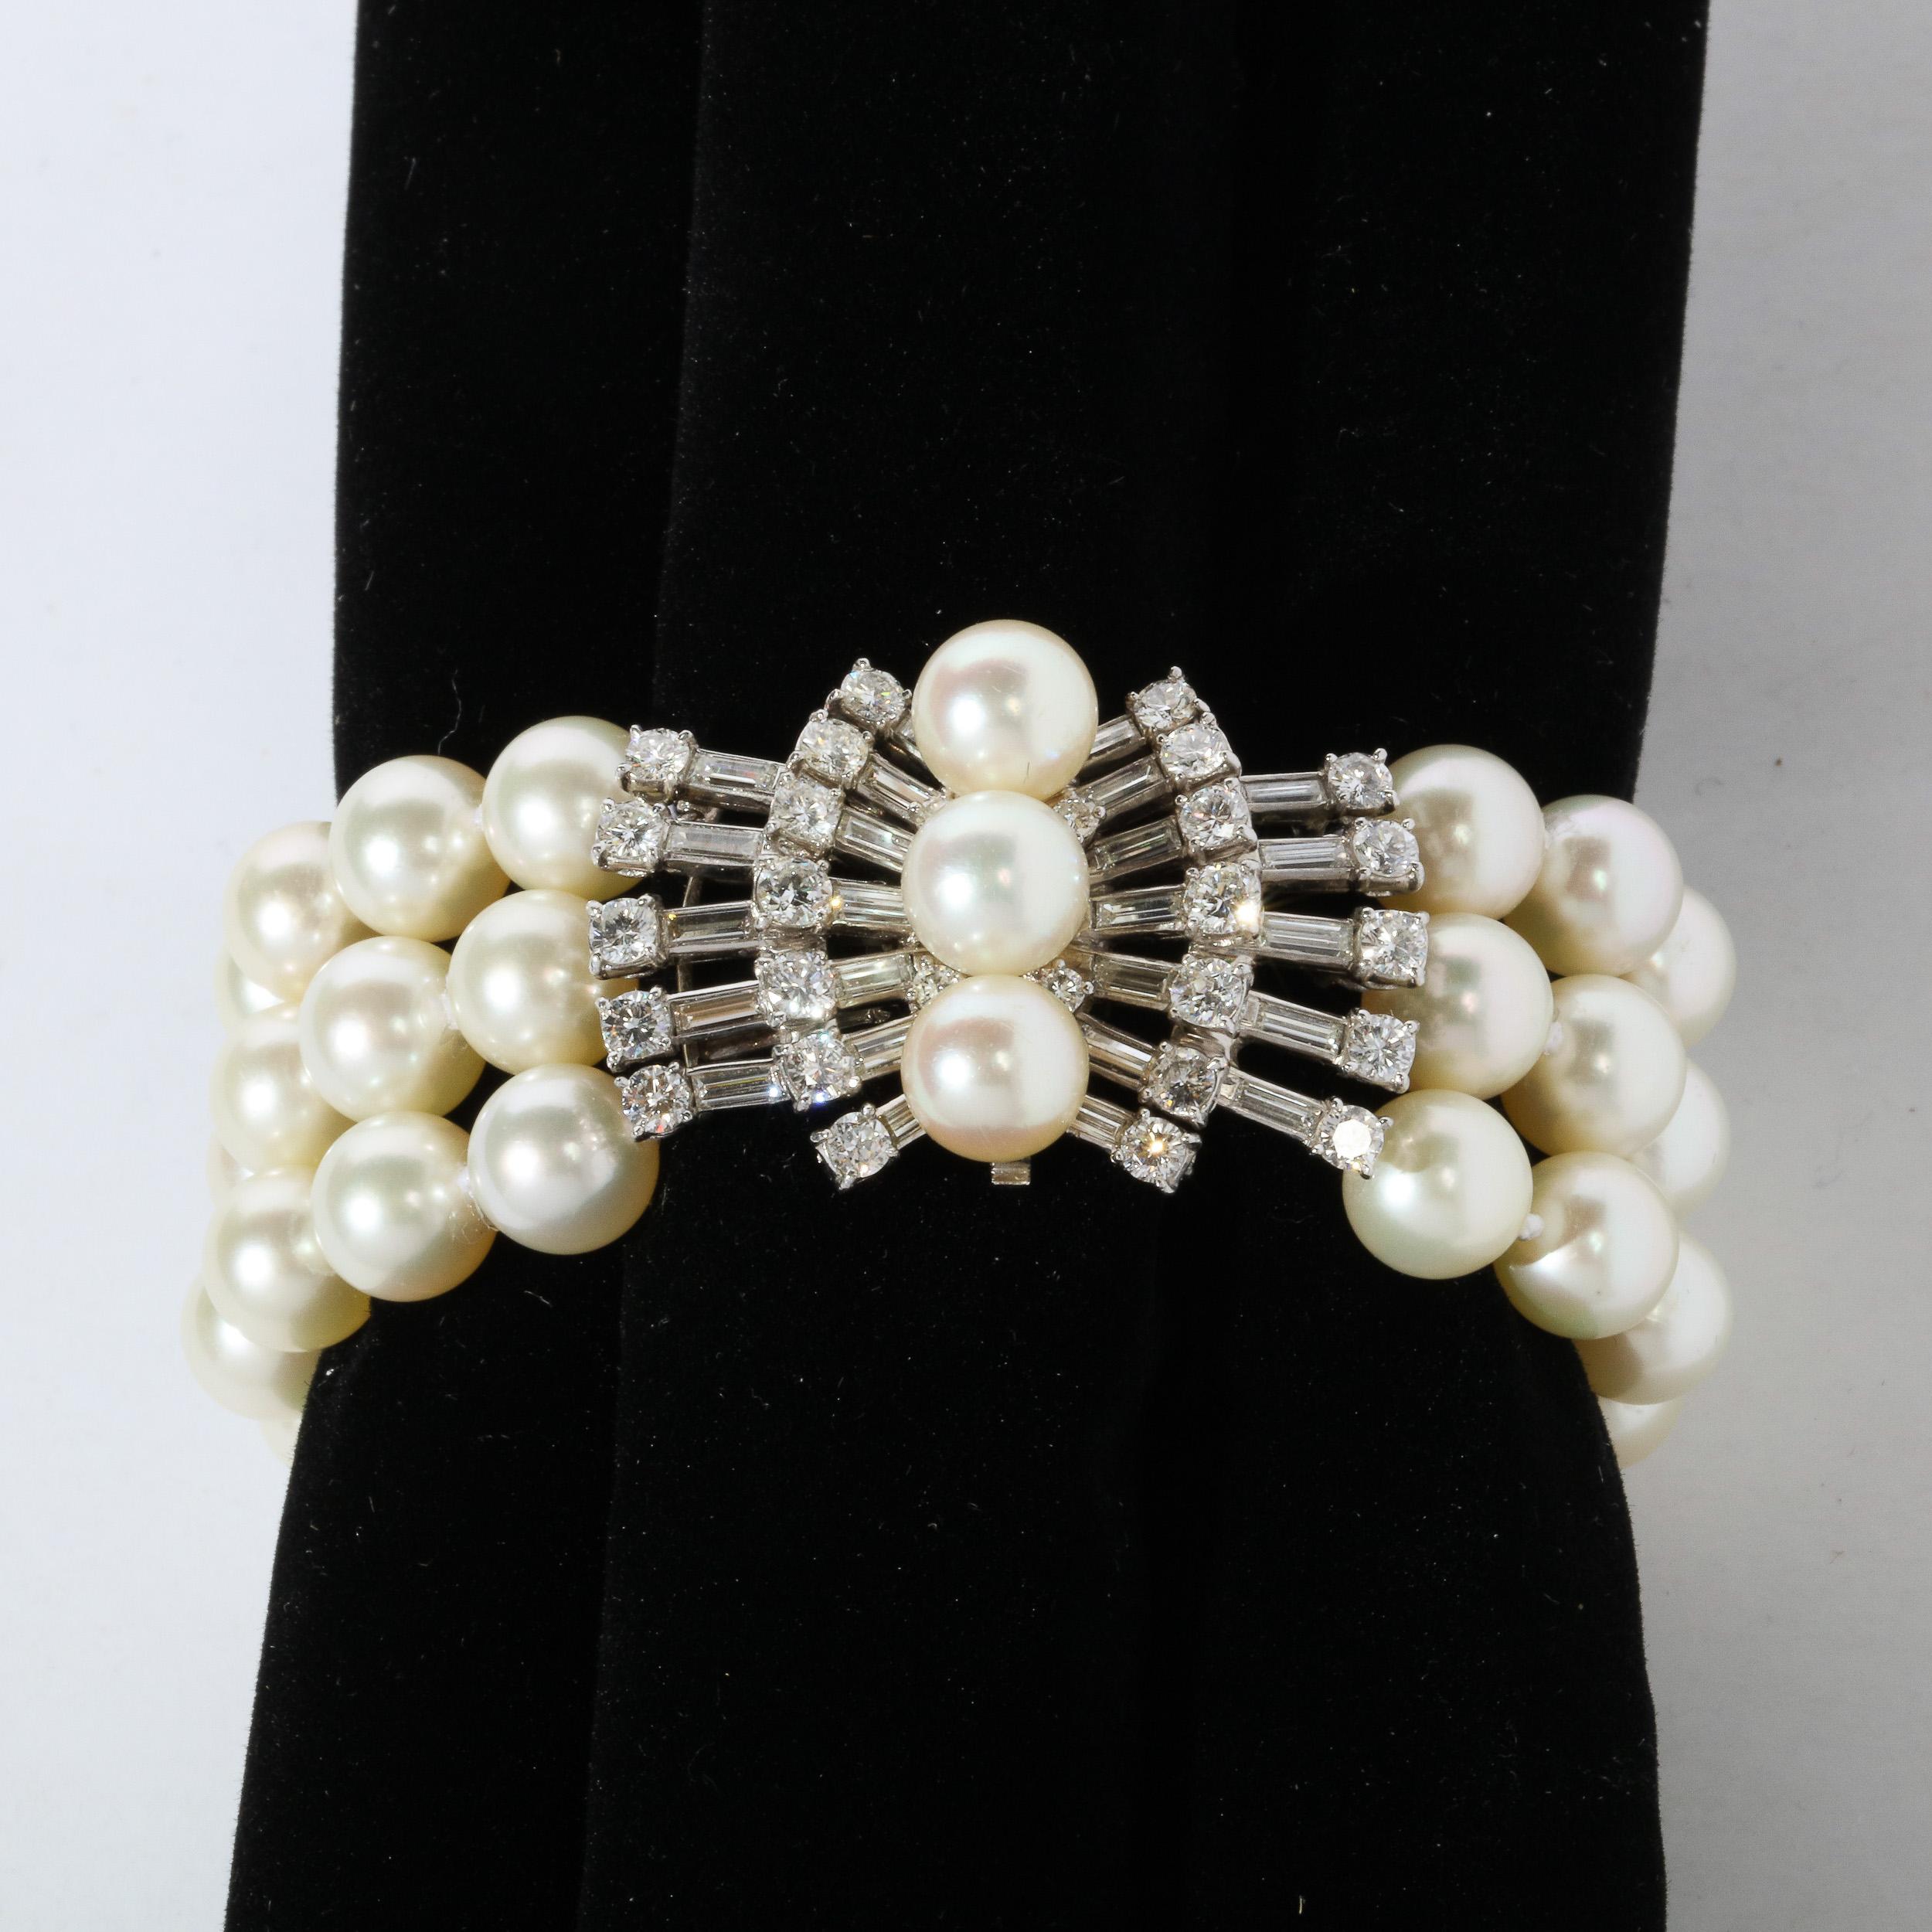 Modern Marianne Ostier Triple Strand Cultured Pearls Bracelet w/ 5 Karat Diamond Clasp